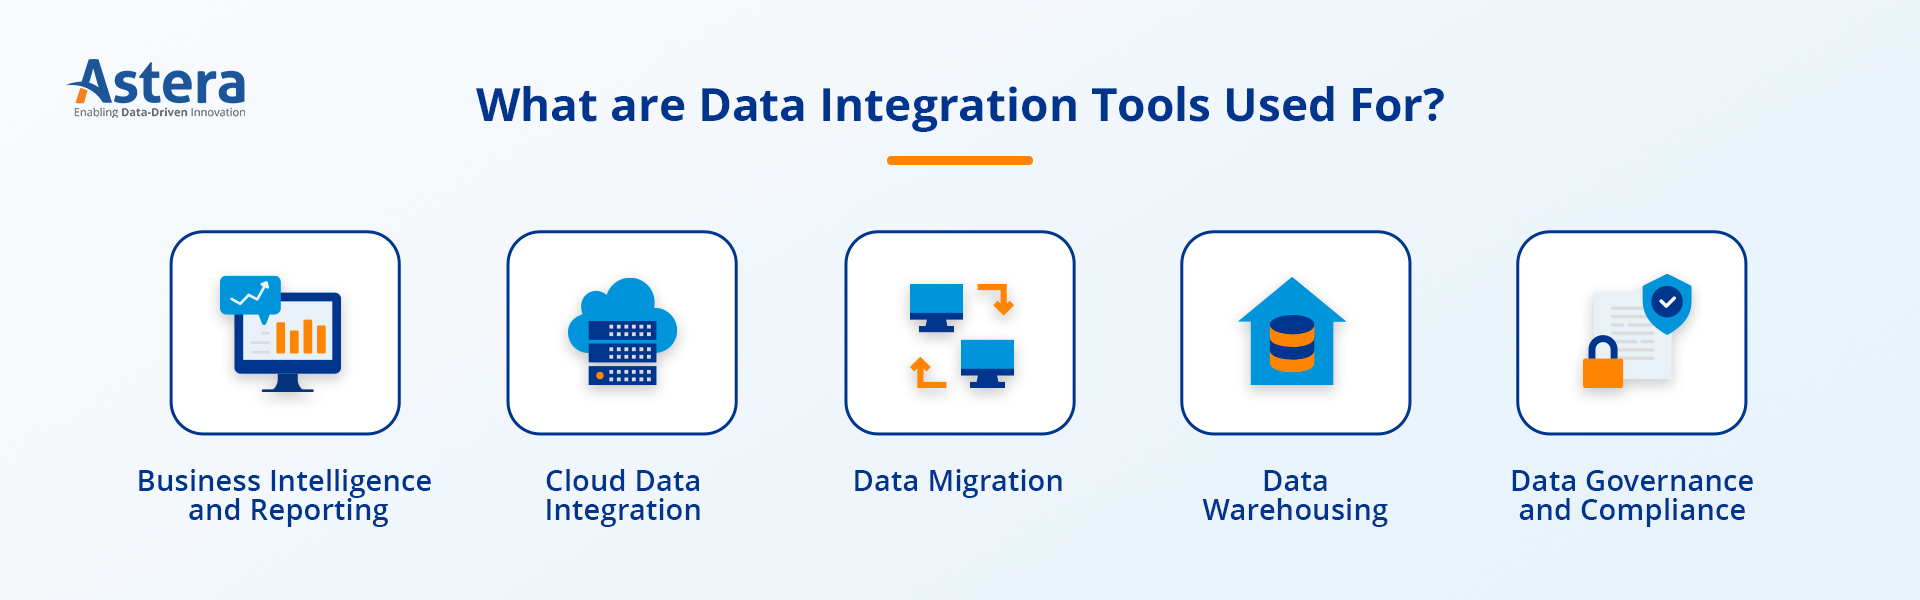 Data Integration Uses